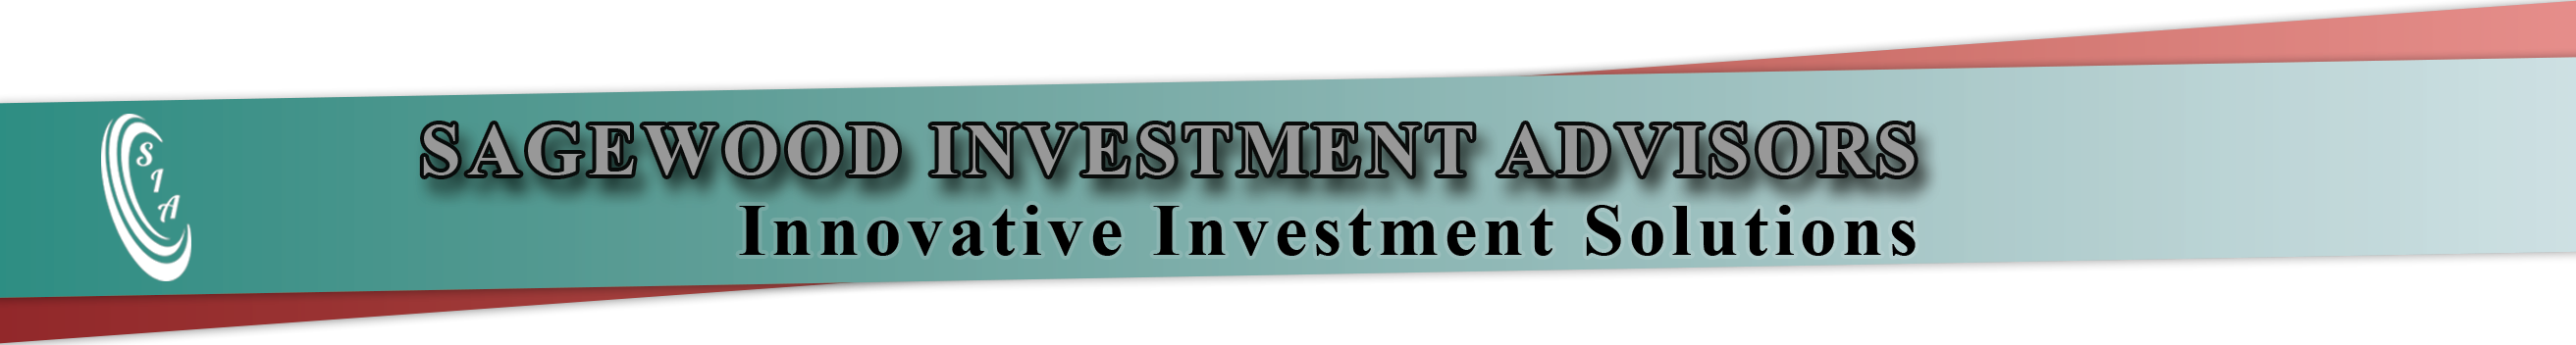 Sagewood Investment Advisors